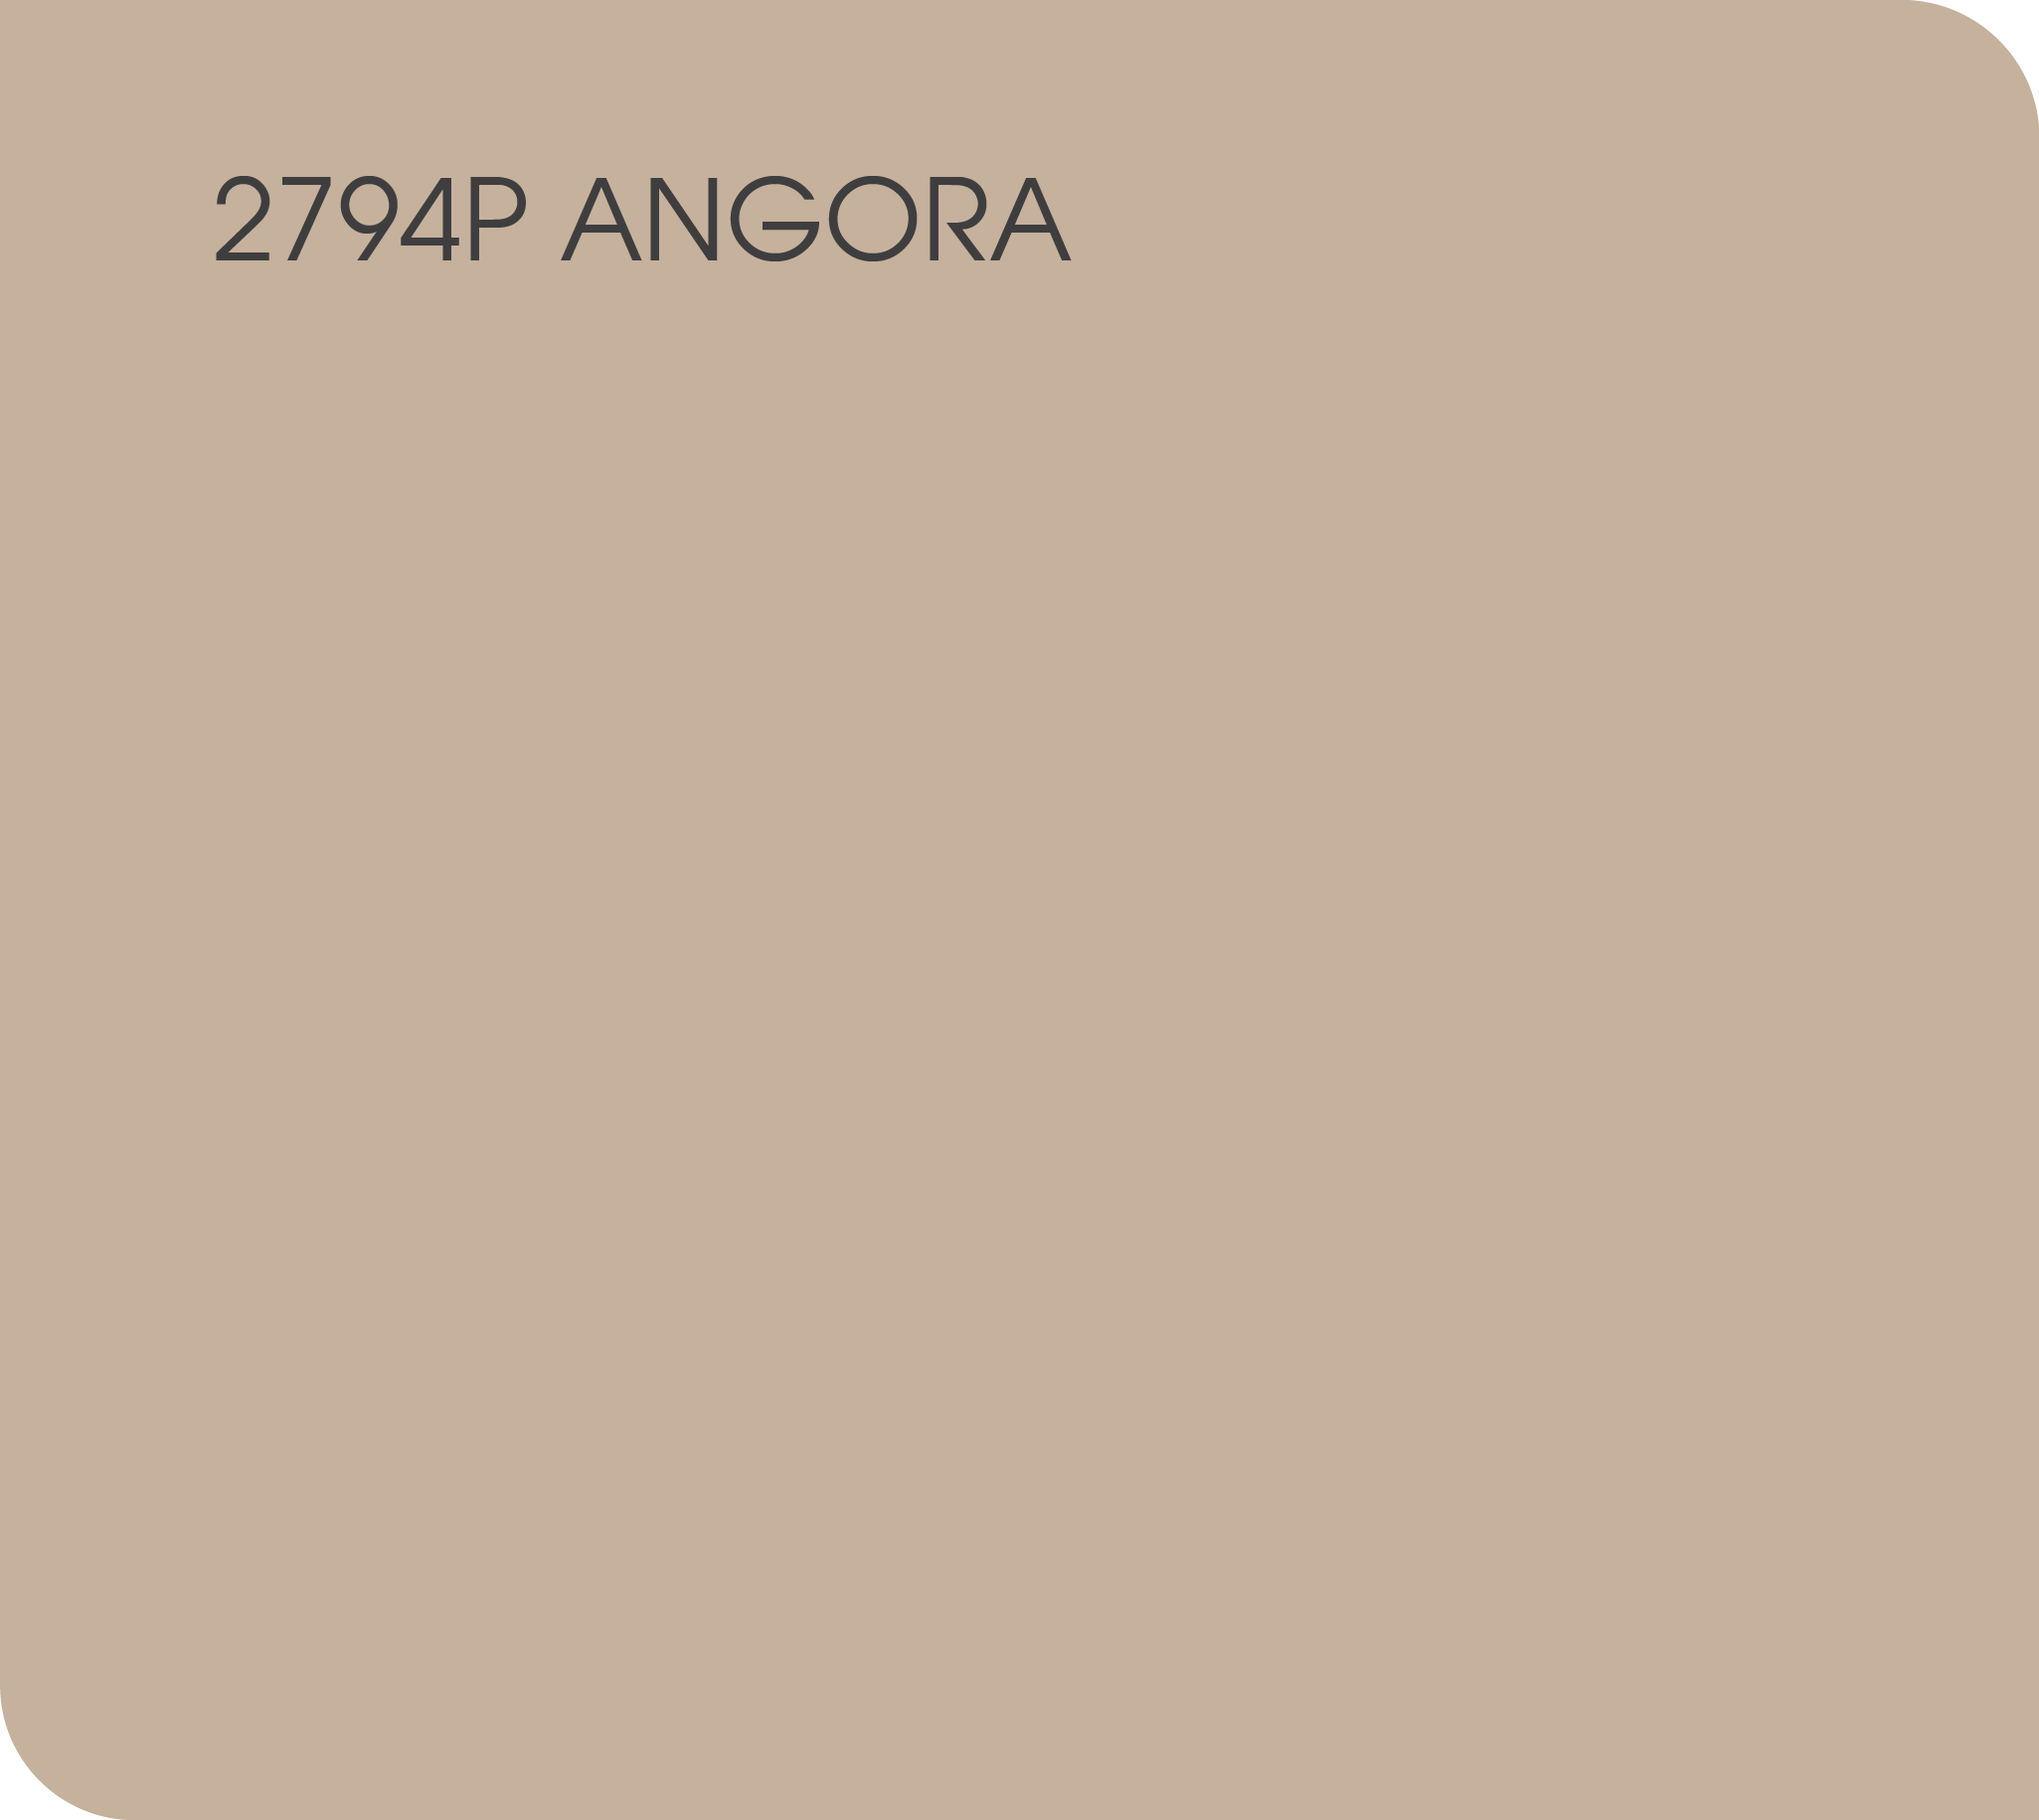 angora 2794P